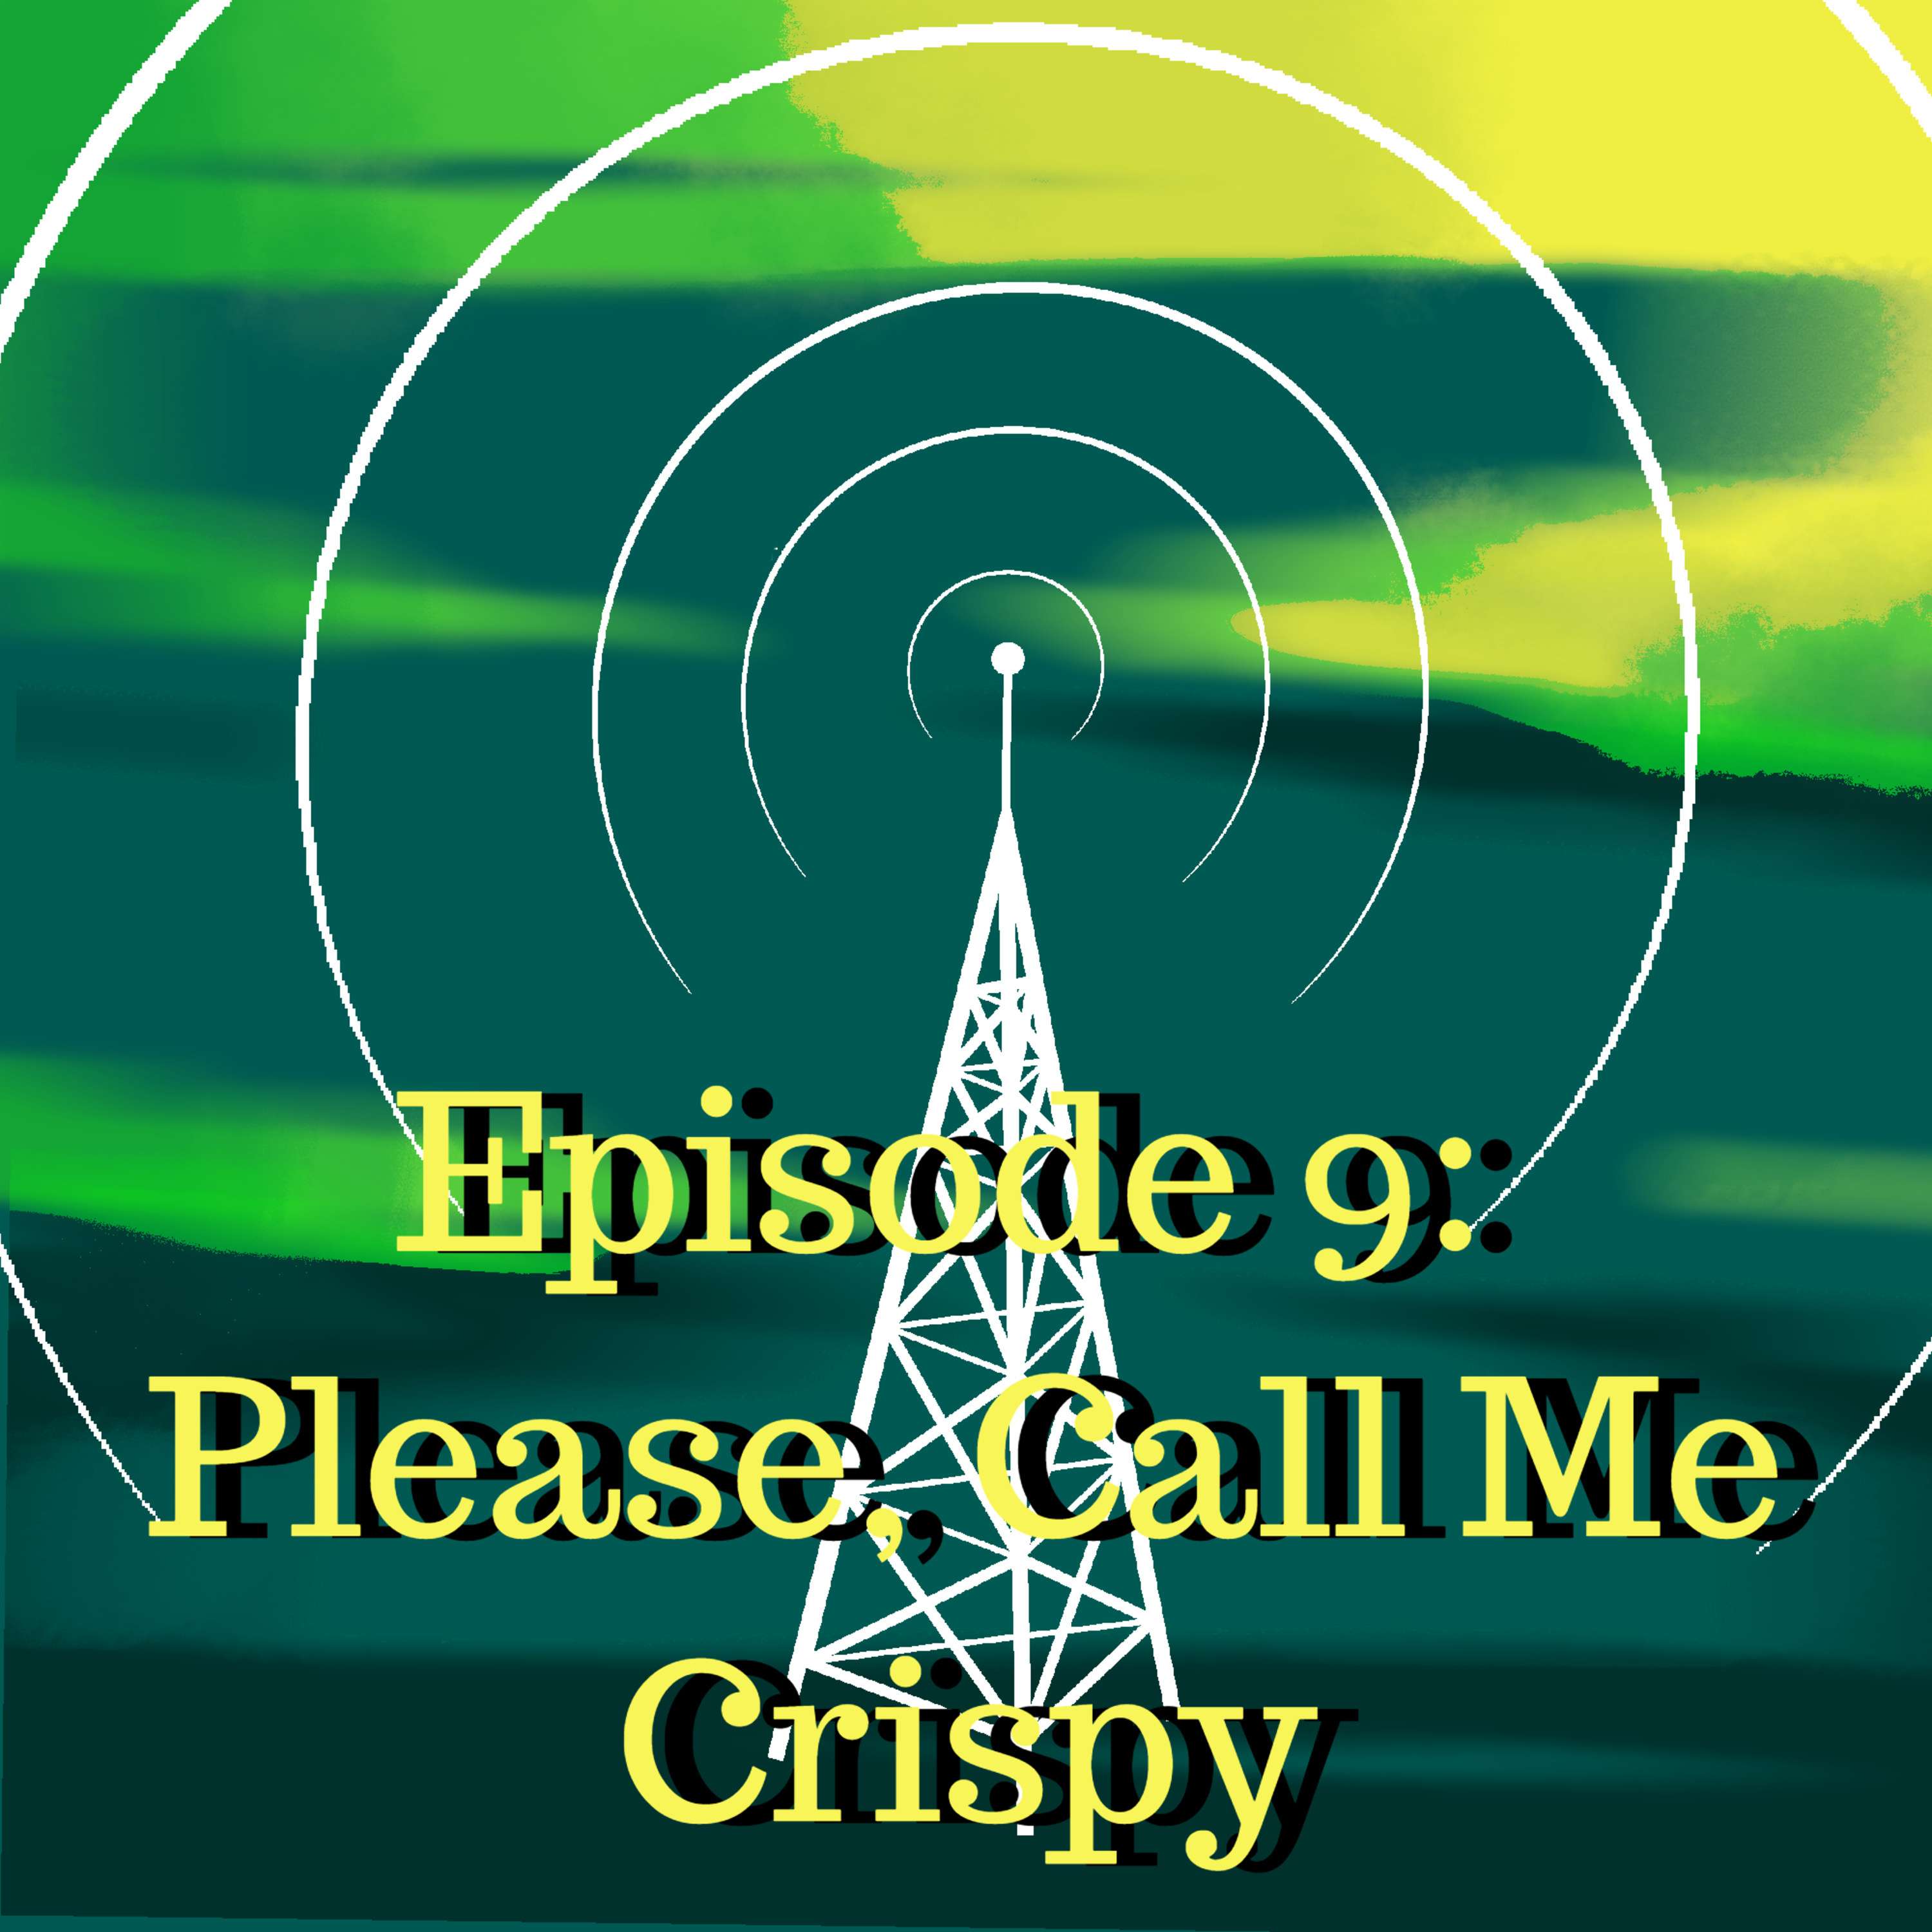 Episode 9: ”Please, Call Me Crispy”